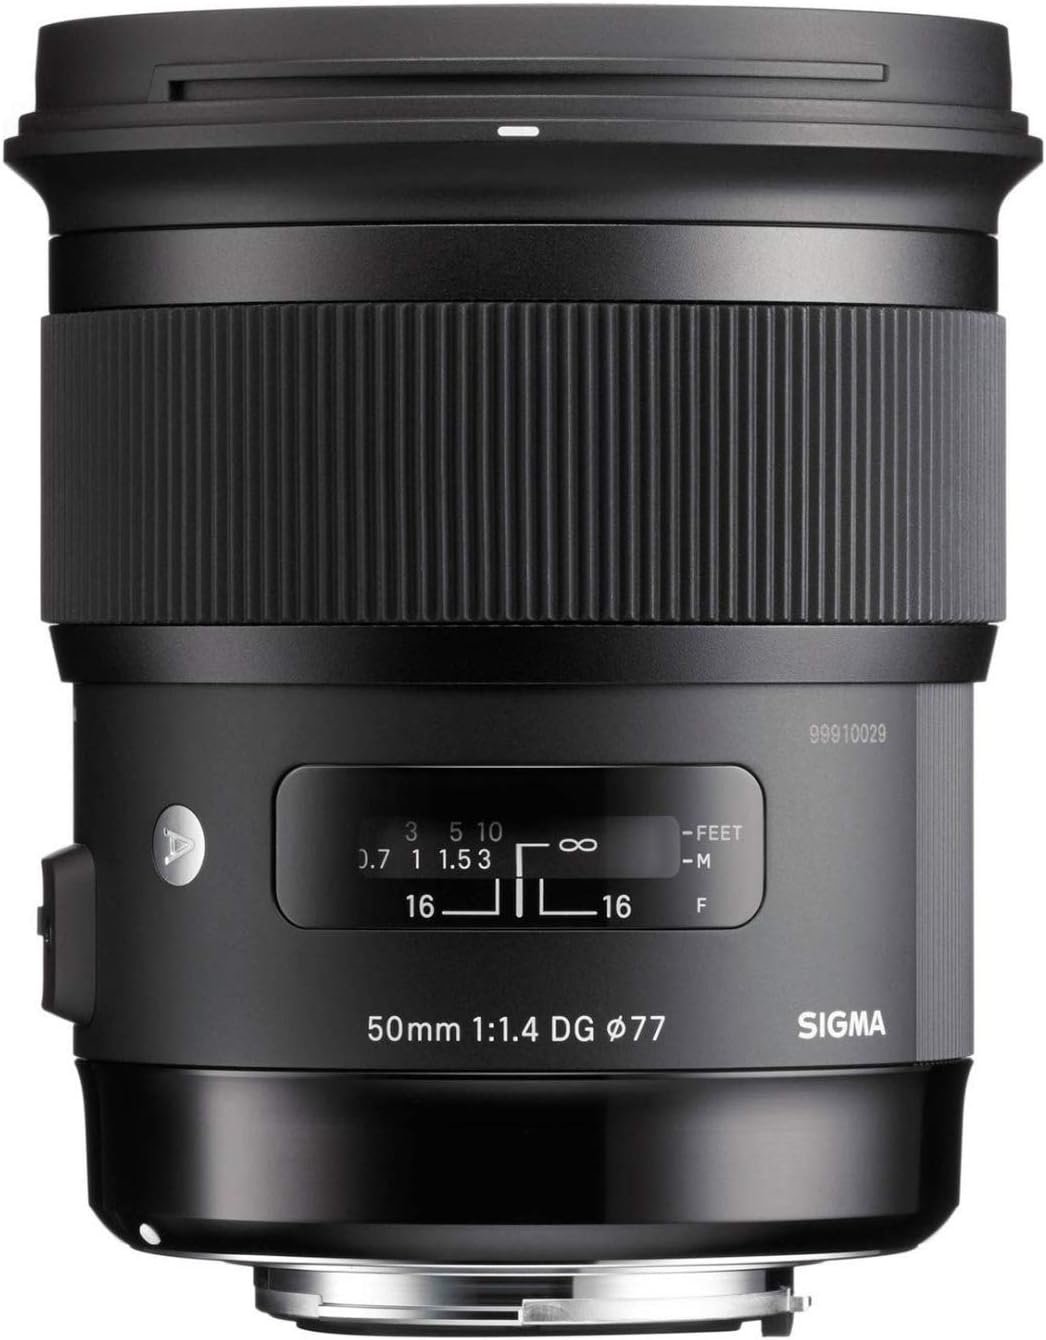 Sigma 50mm Art lens